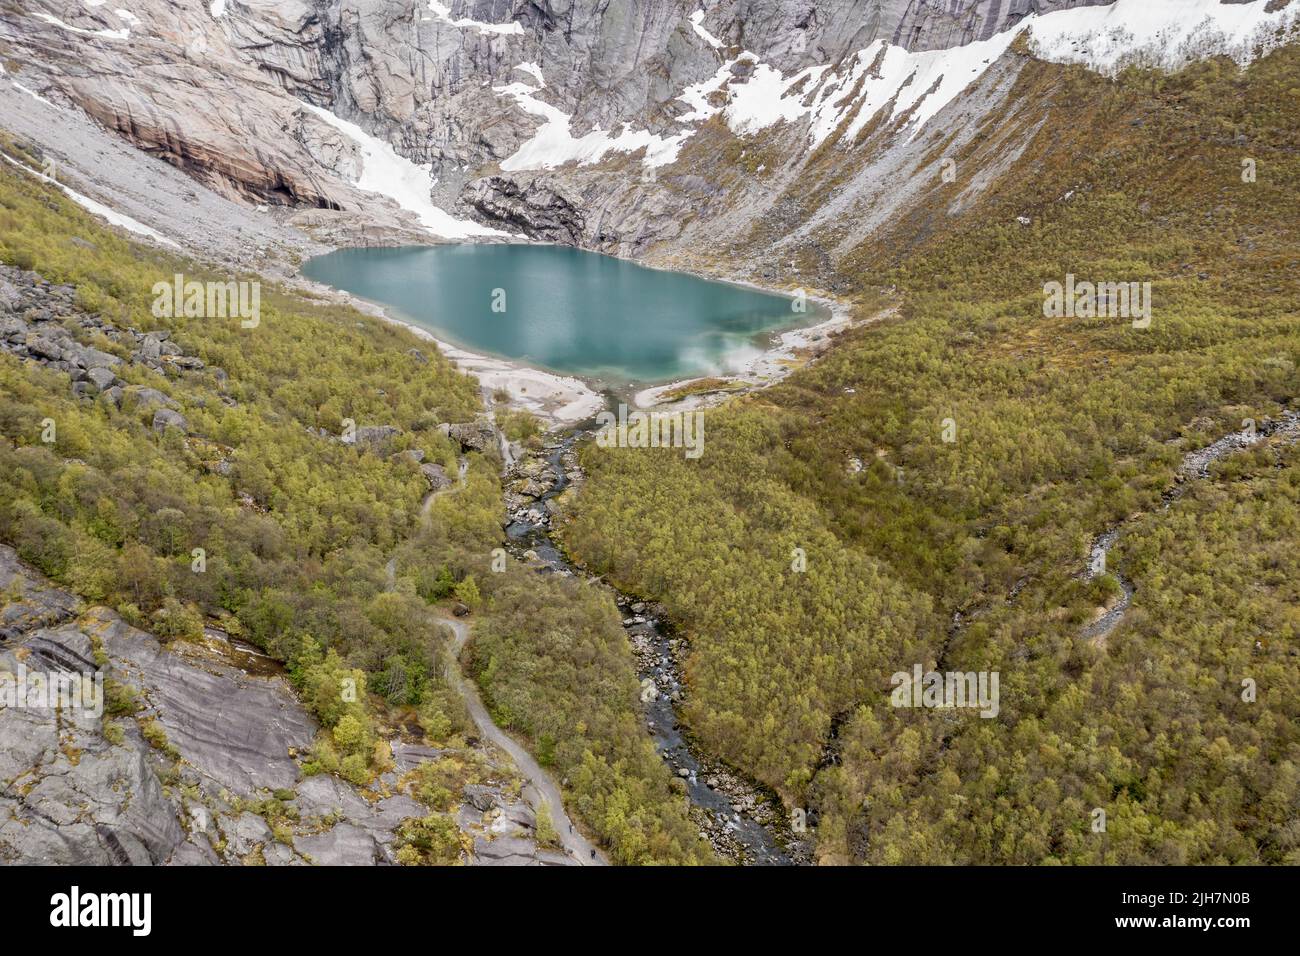 Aerial view of glacier Briksdalsbre, a glacier tongue of Jostedalsbre, and glacier lake, Norway Stock Photo